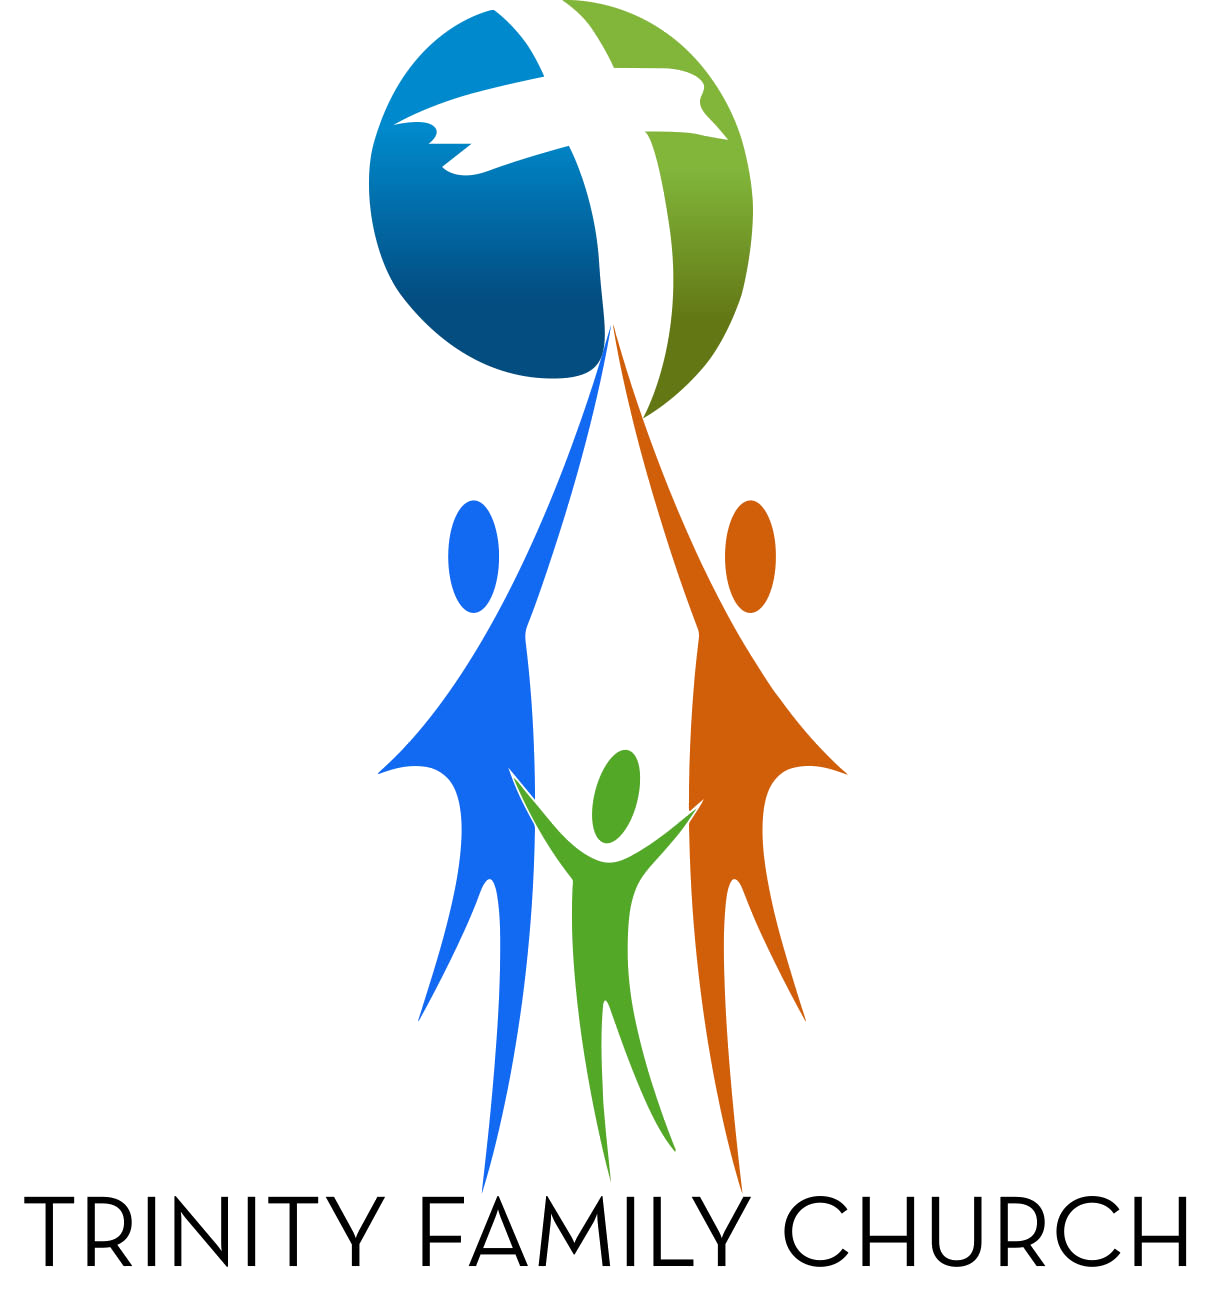 PNG Church Family-PlusPNG.com